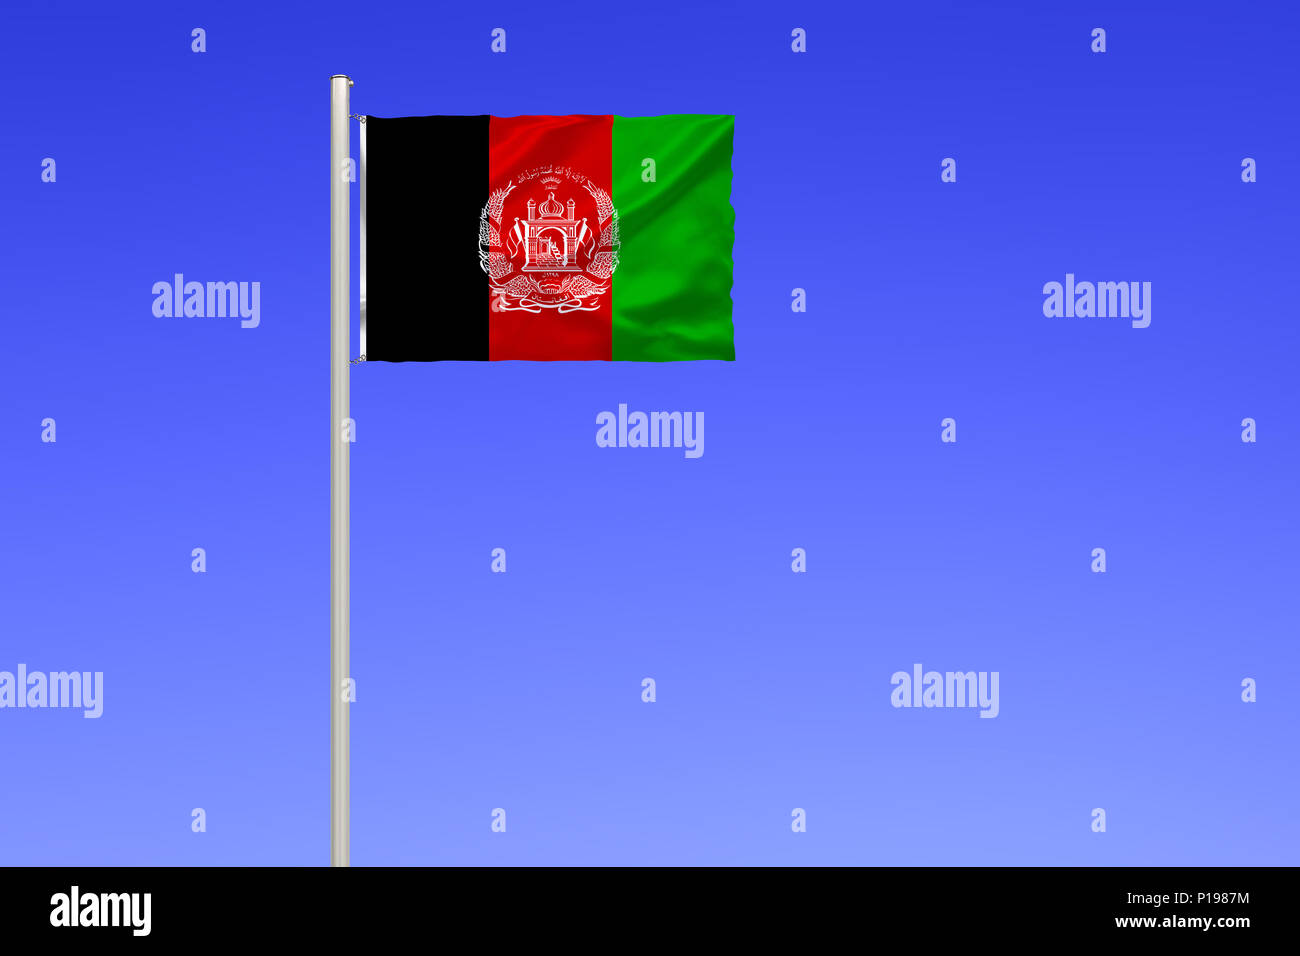 https://c8.alamy.com/comp/P1987M/flag-of-afghanistan-flagge-von-afghanistan-P1987M.jpg